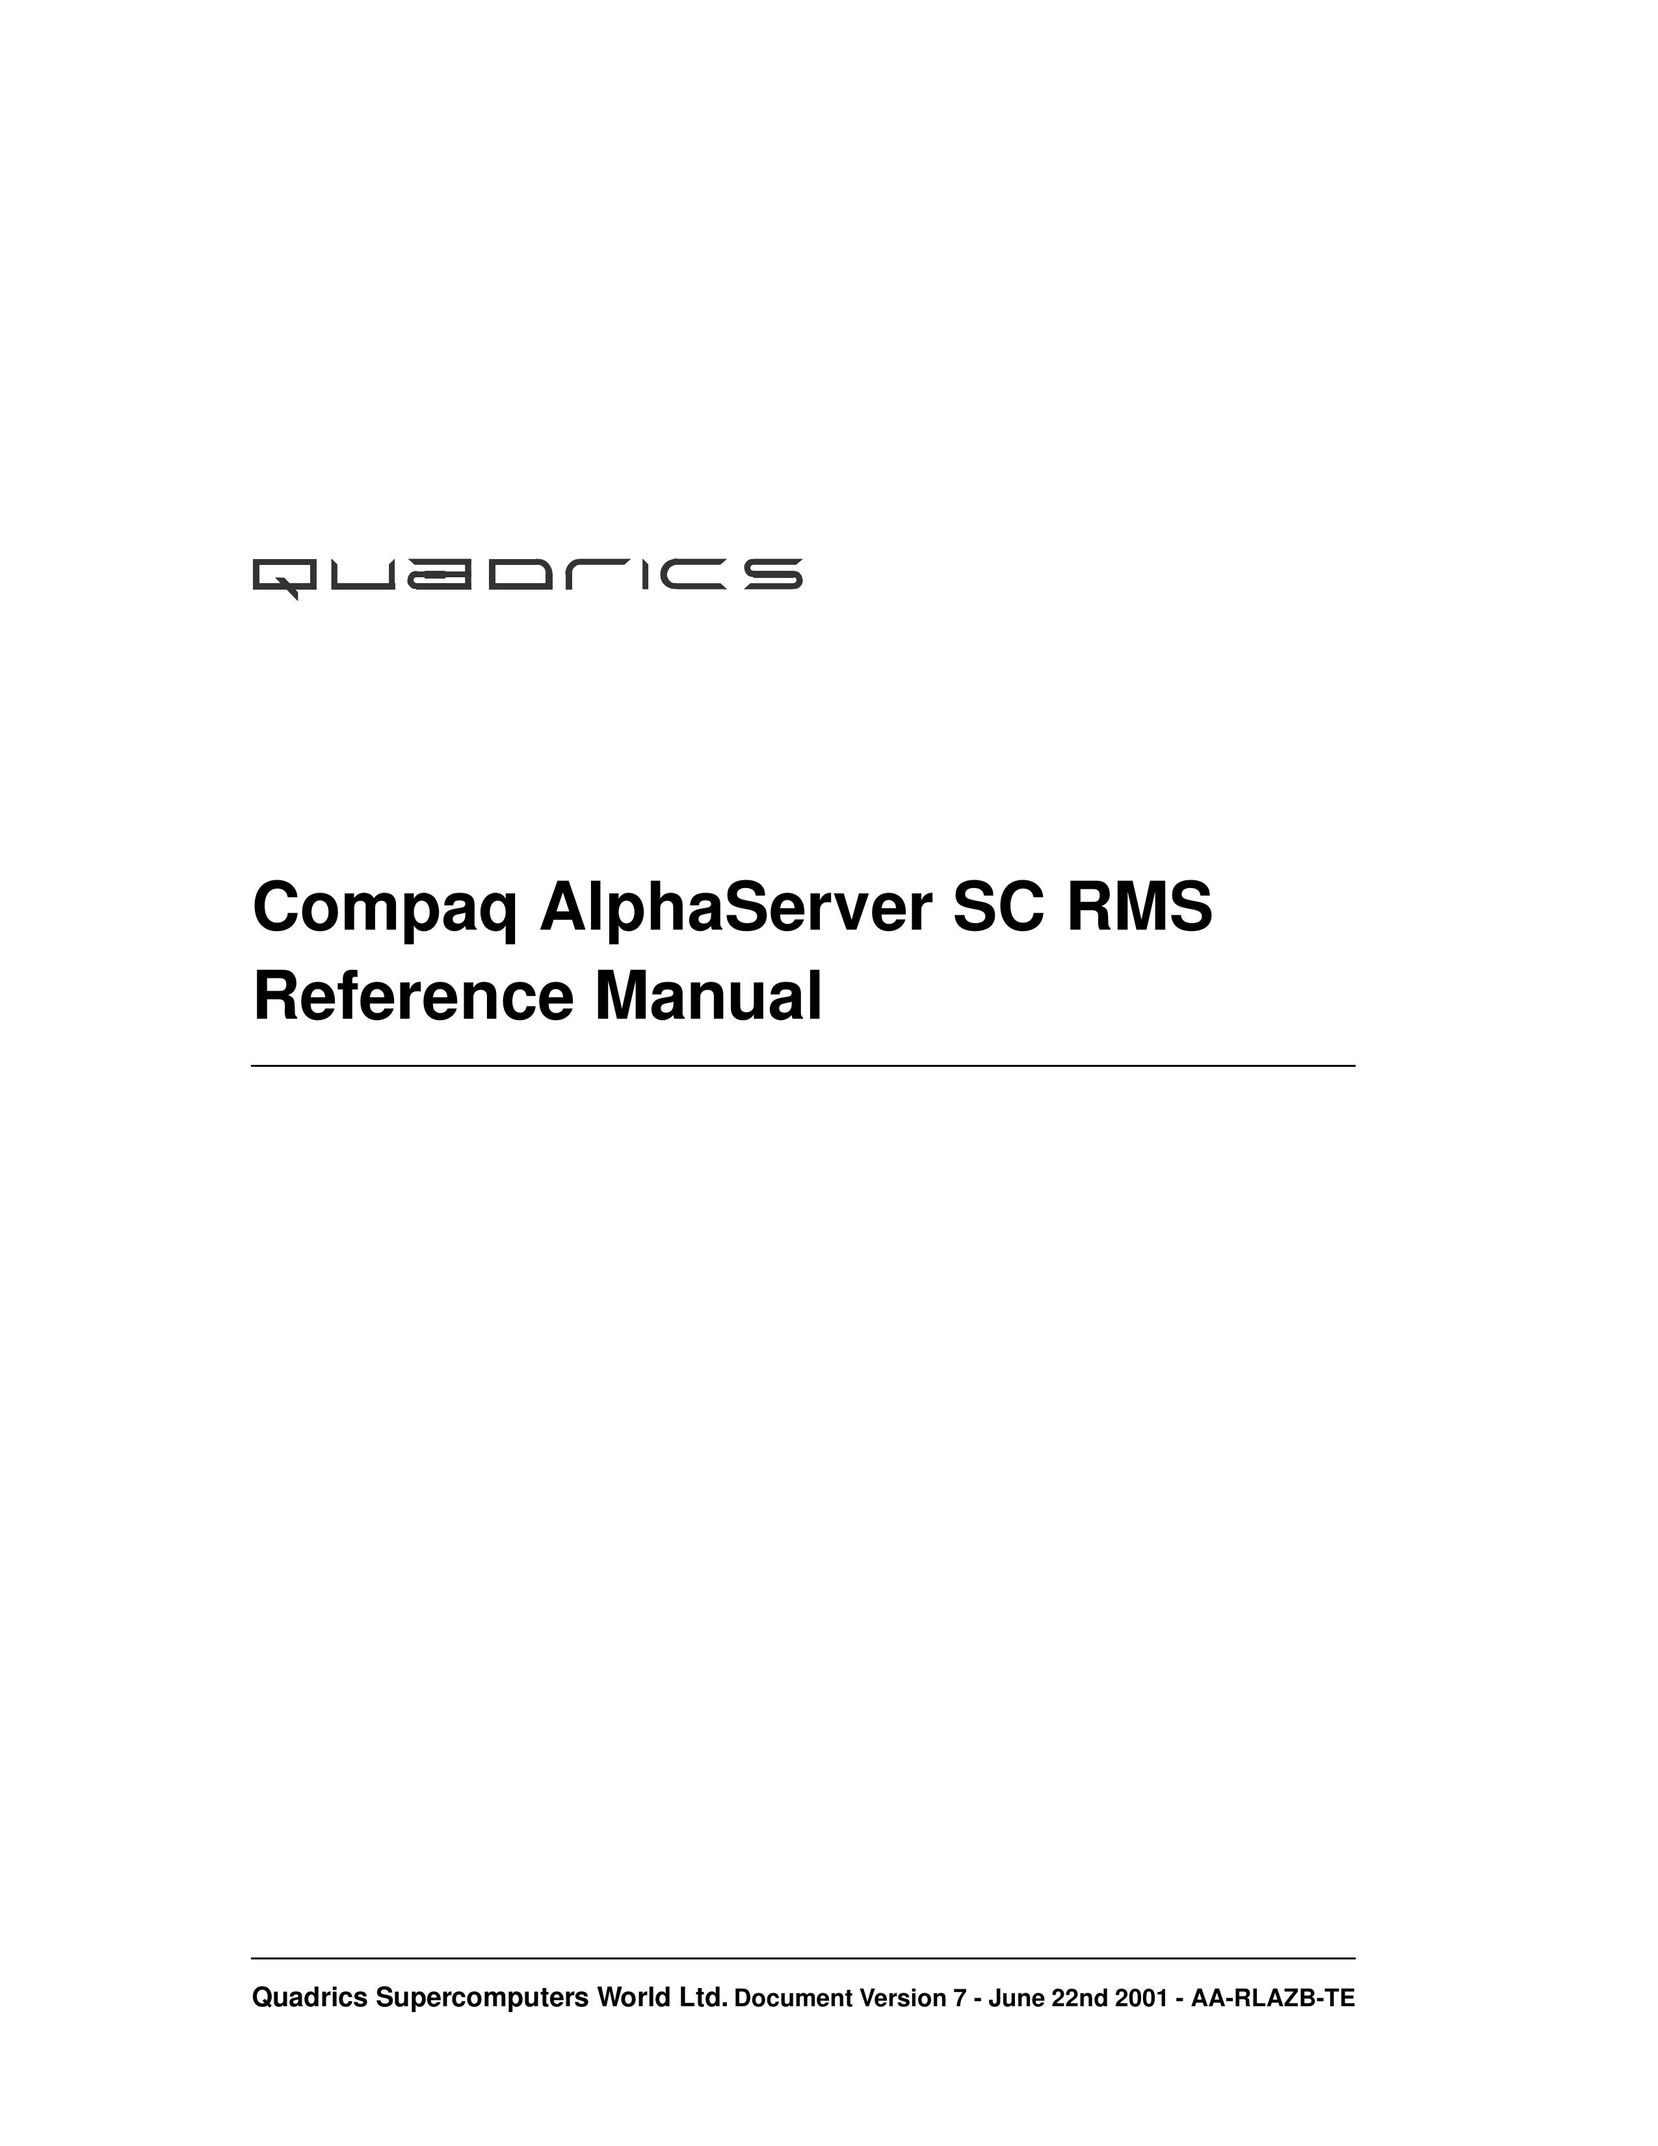 Compaq SC RMS Server User Manual